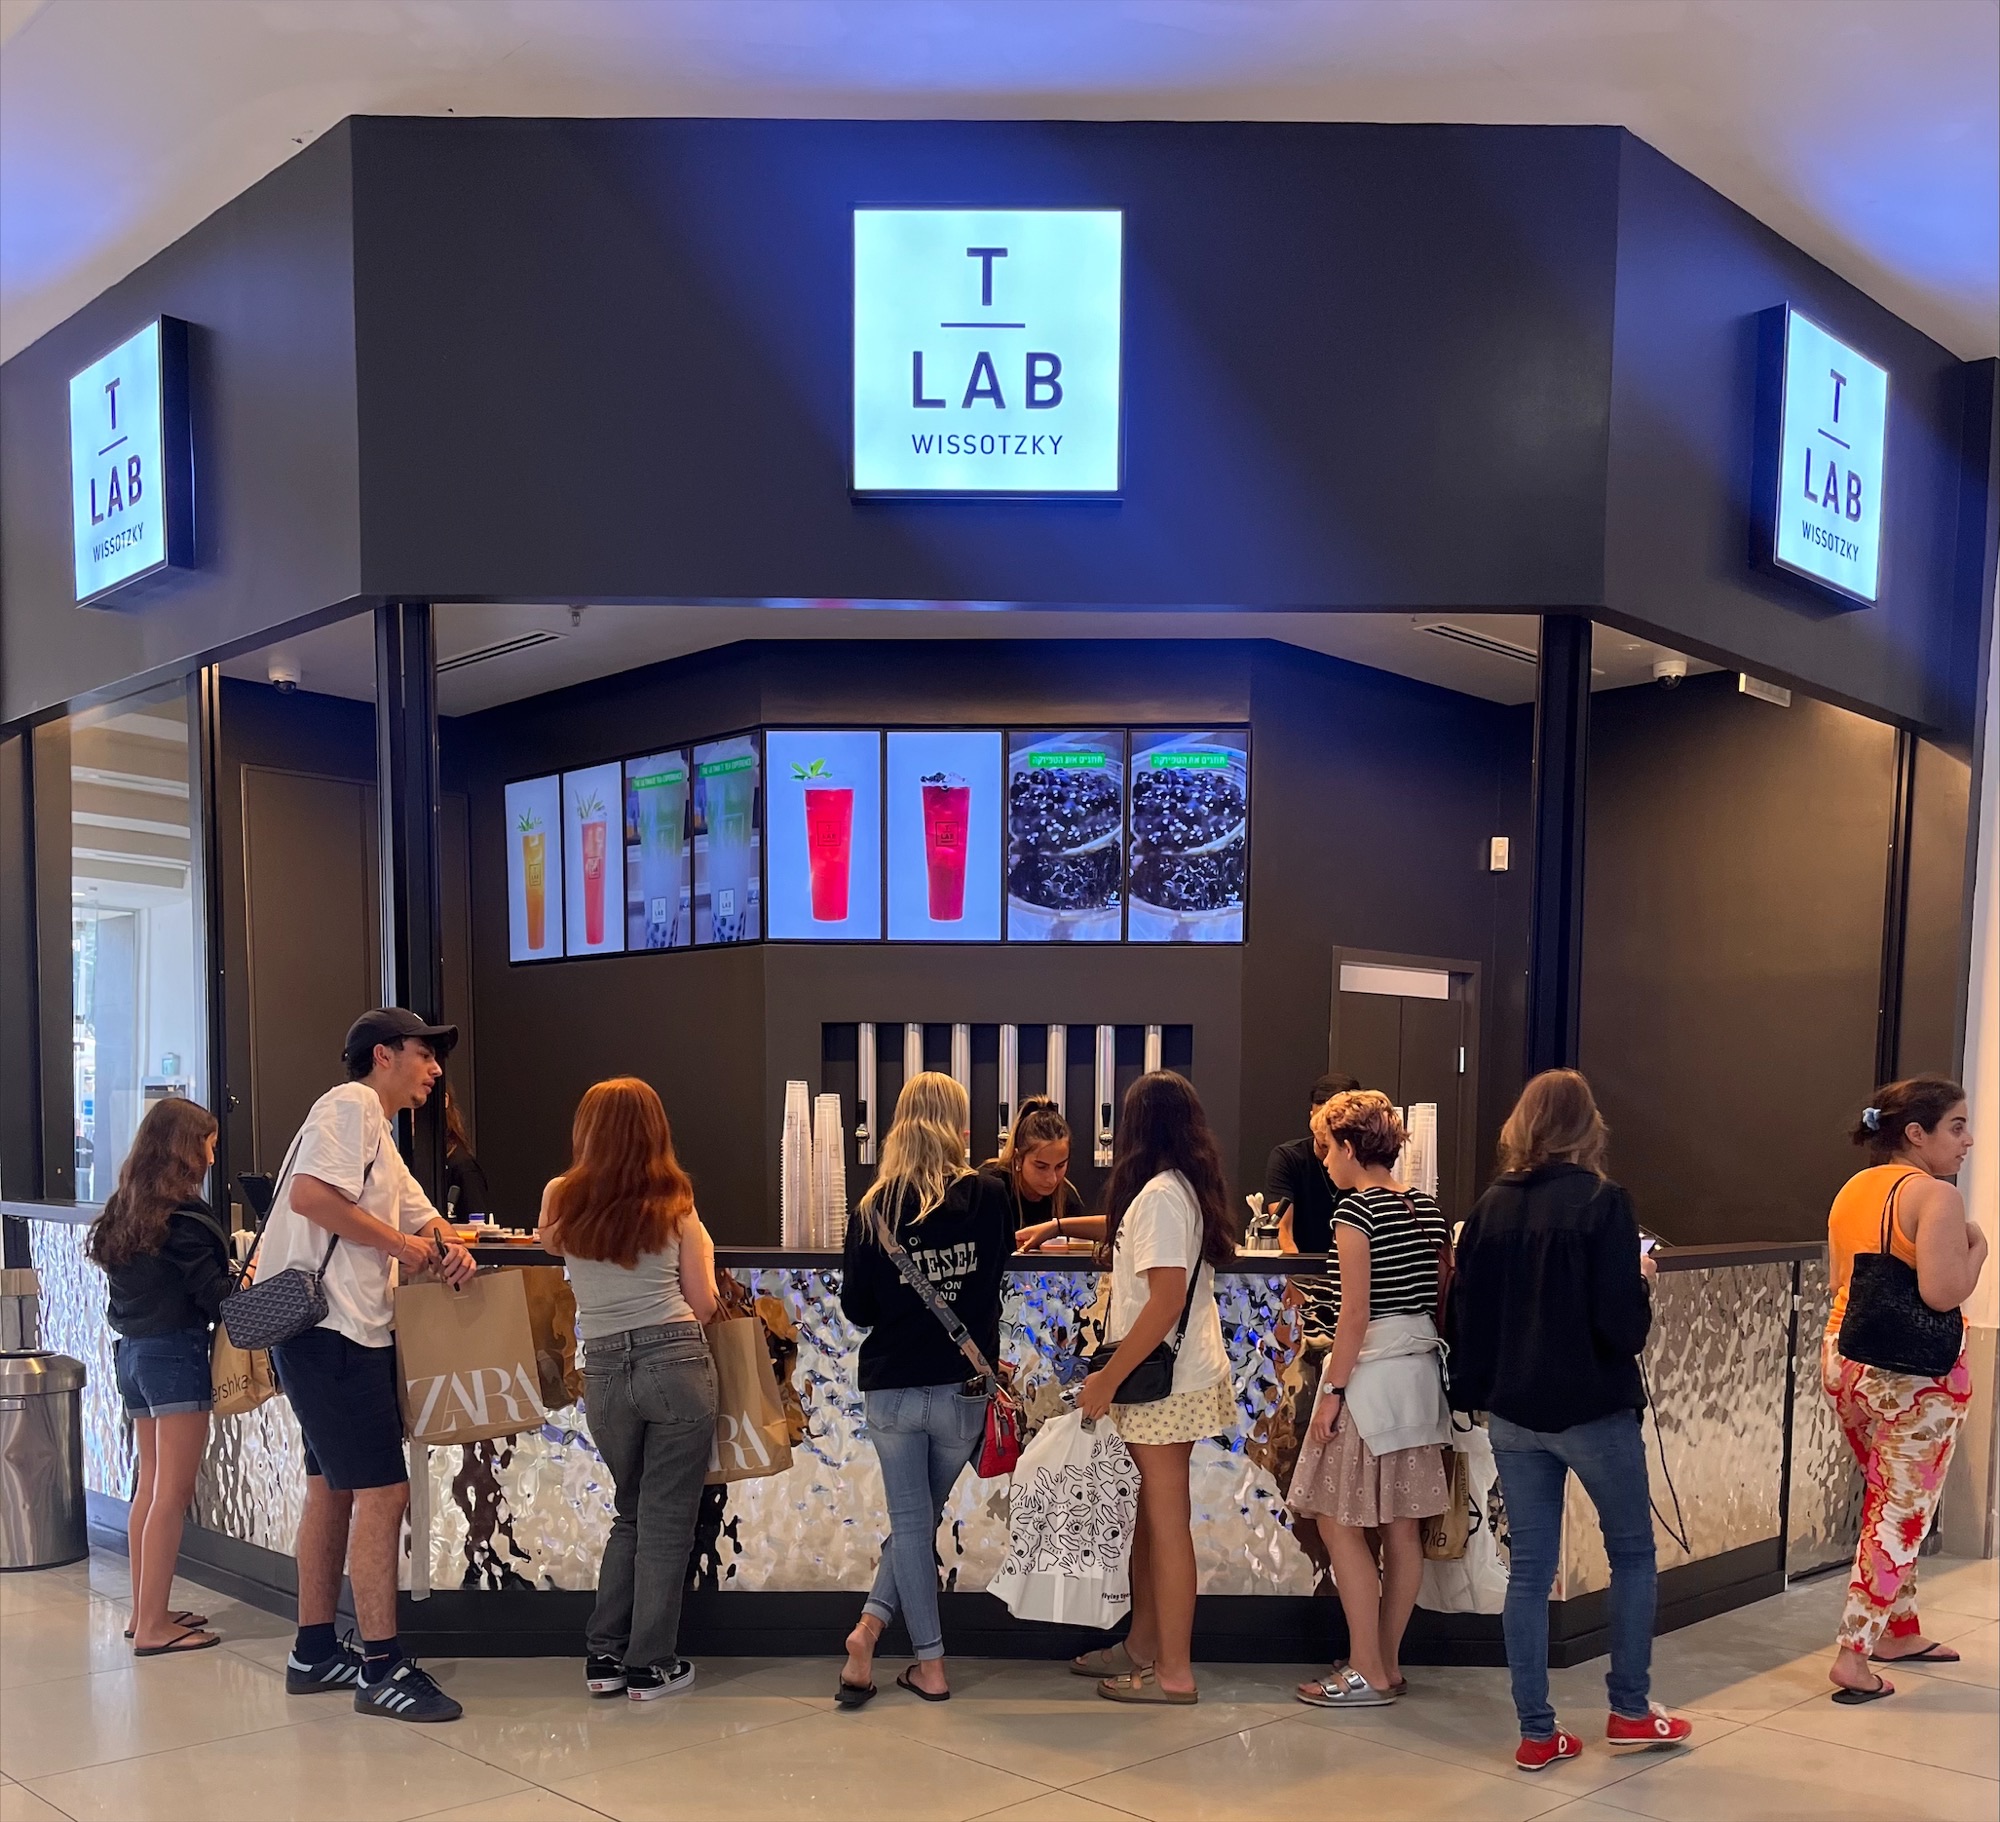 T LAB החנות החדשה בקניון עופר הגדול פתח תקוה (צילום: לידור טרשי)